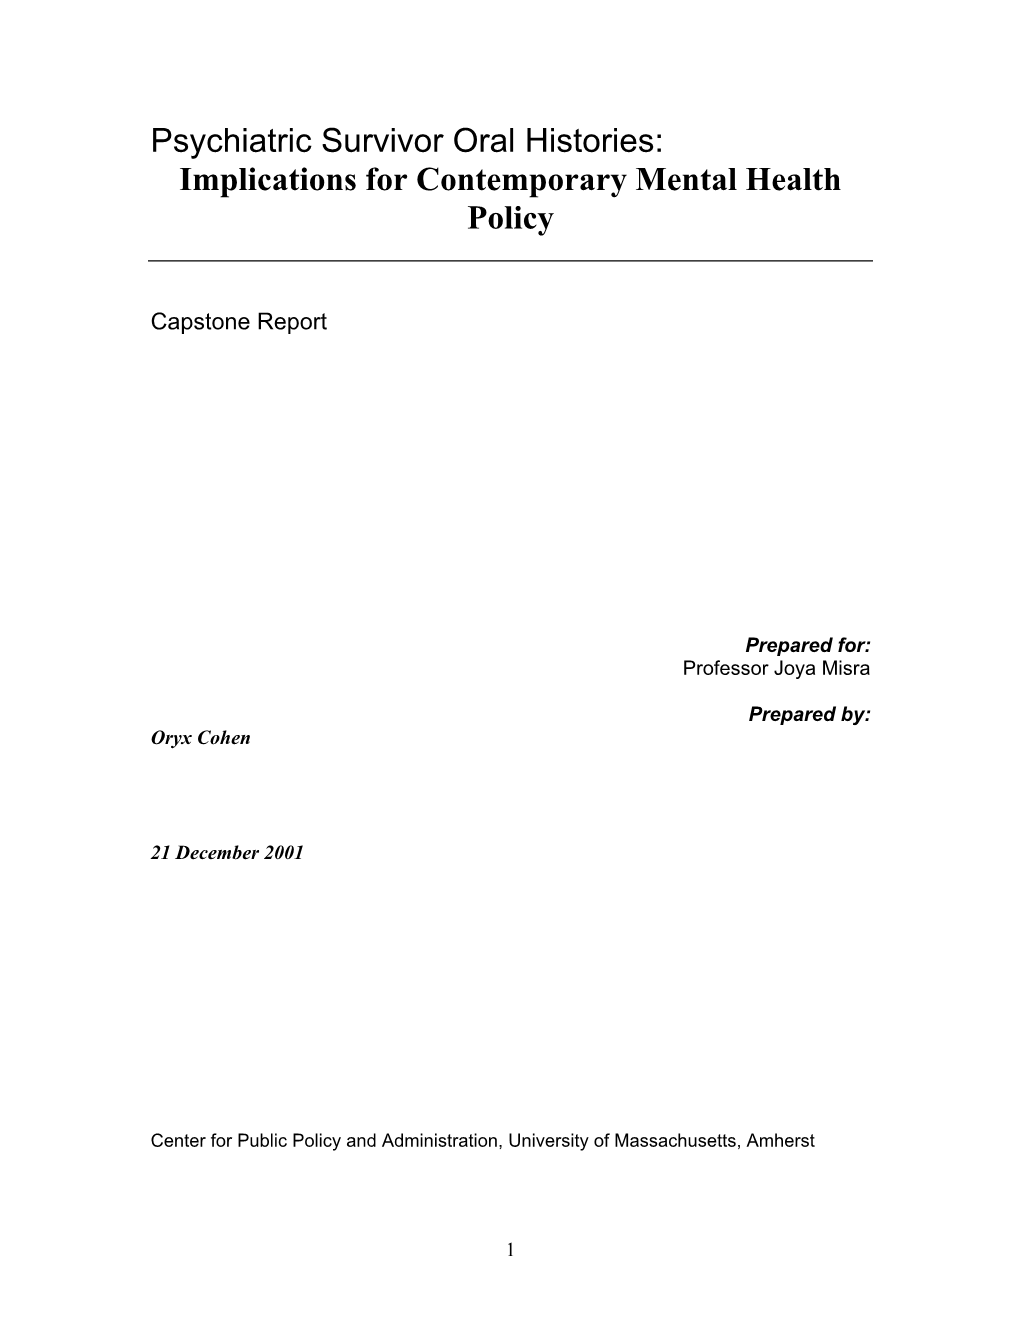 Psychiatric Survivor Oral Histories: Implications for Contemporary Mental Health Policy